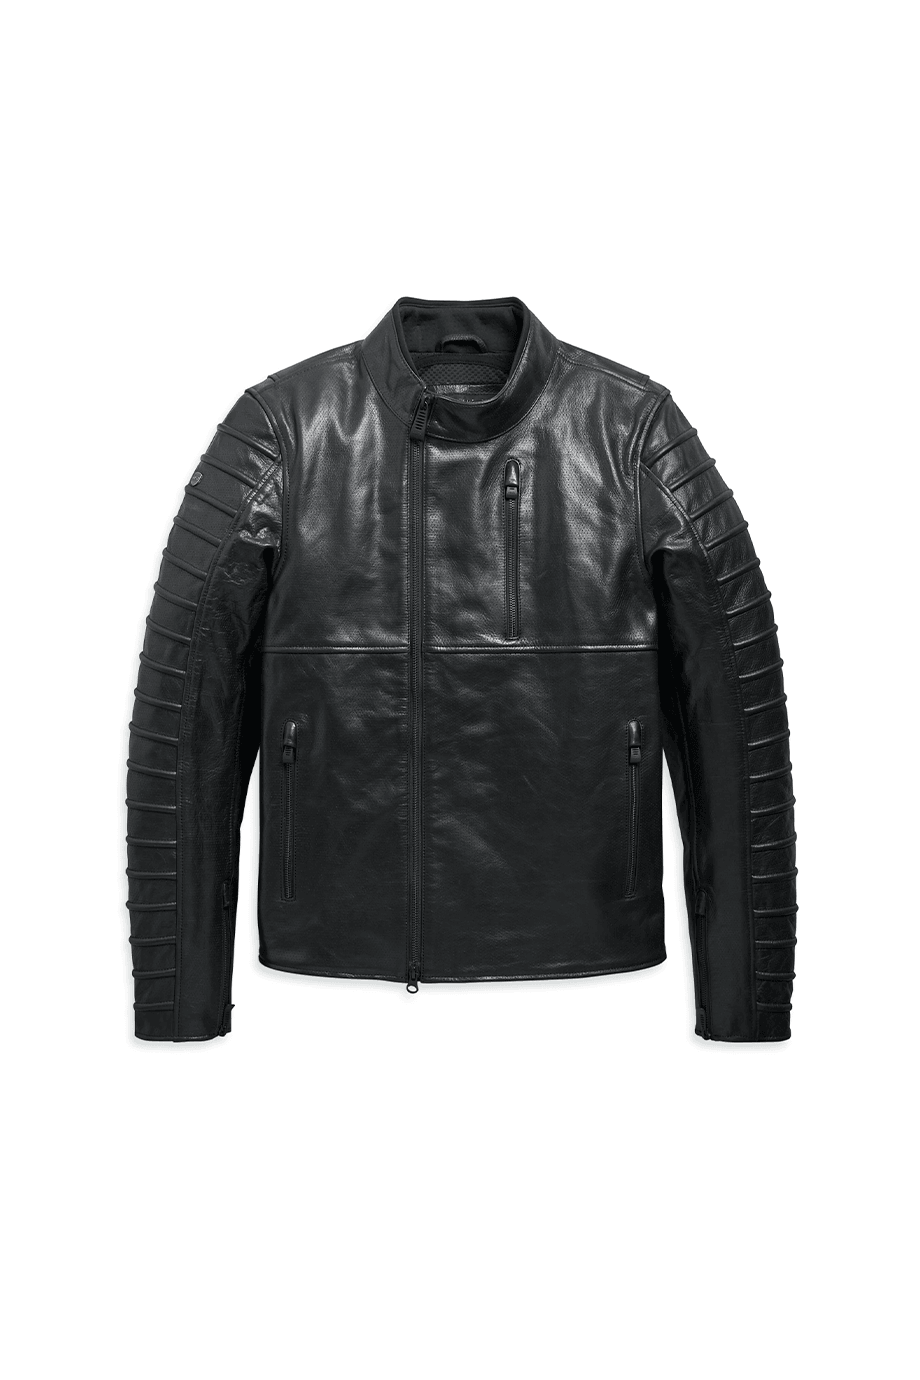 Harley-Davidson® Men's Ozello Perforated Leather Jacket